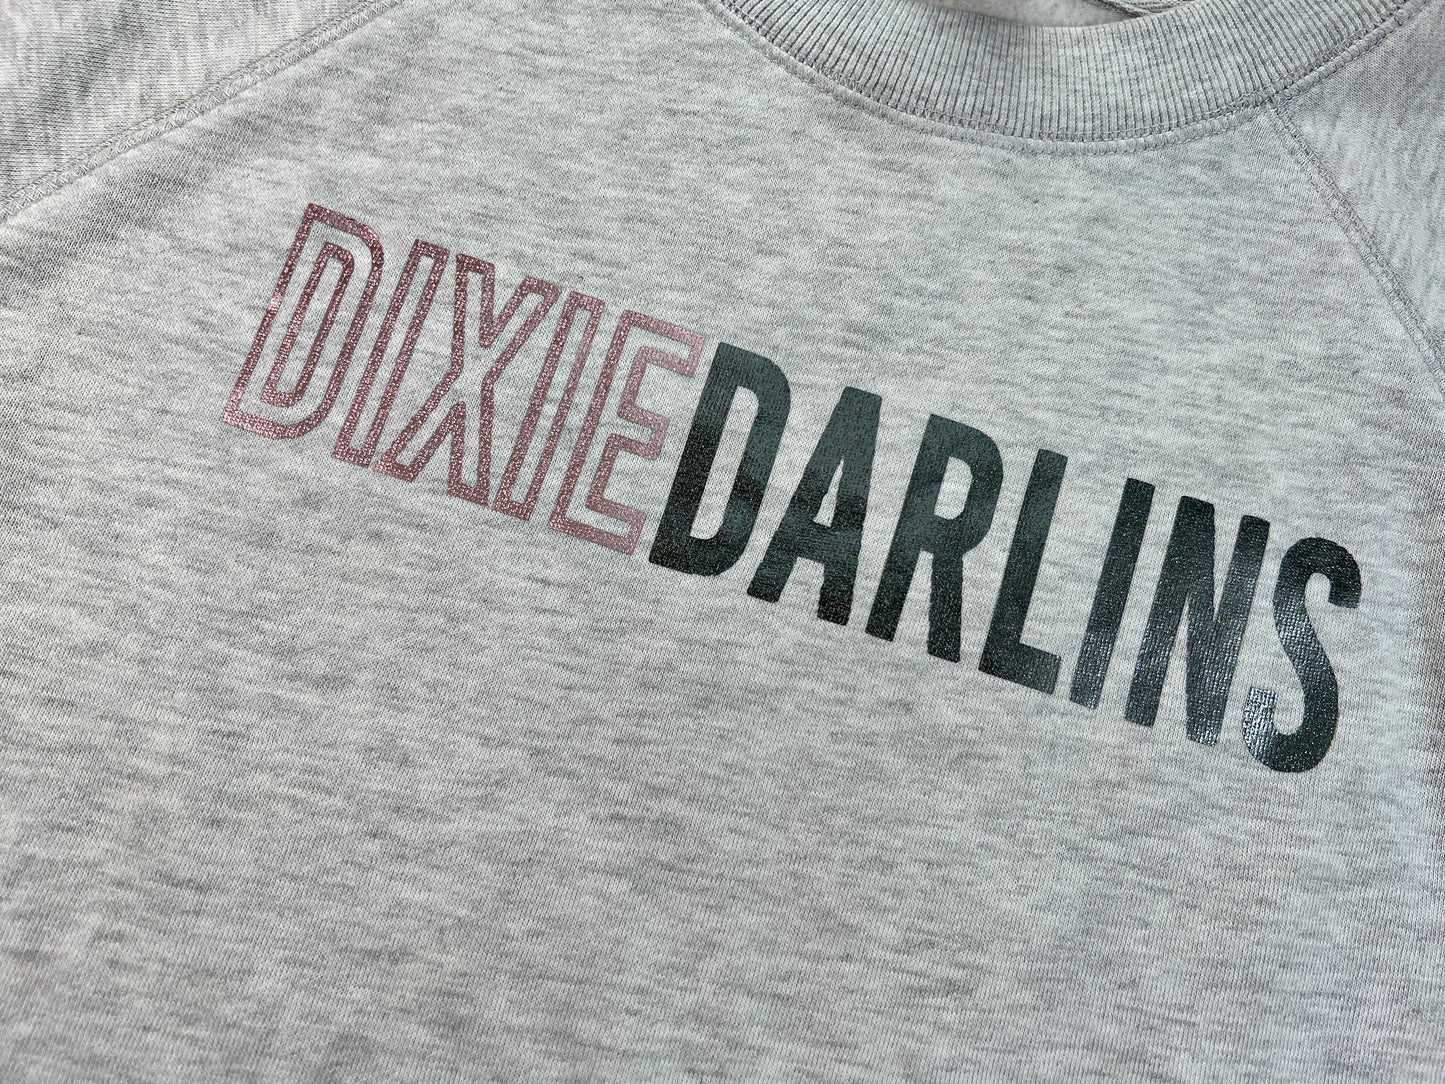 Dixie Darlins Short Sleeve Crew